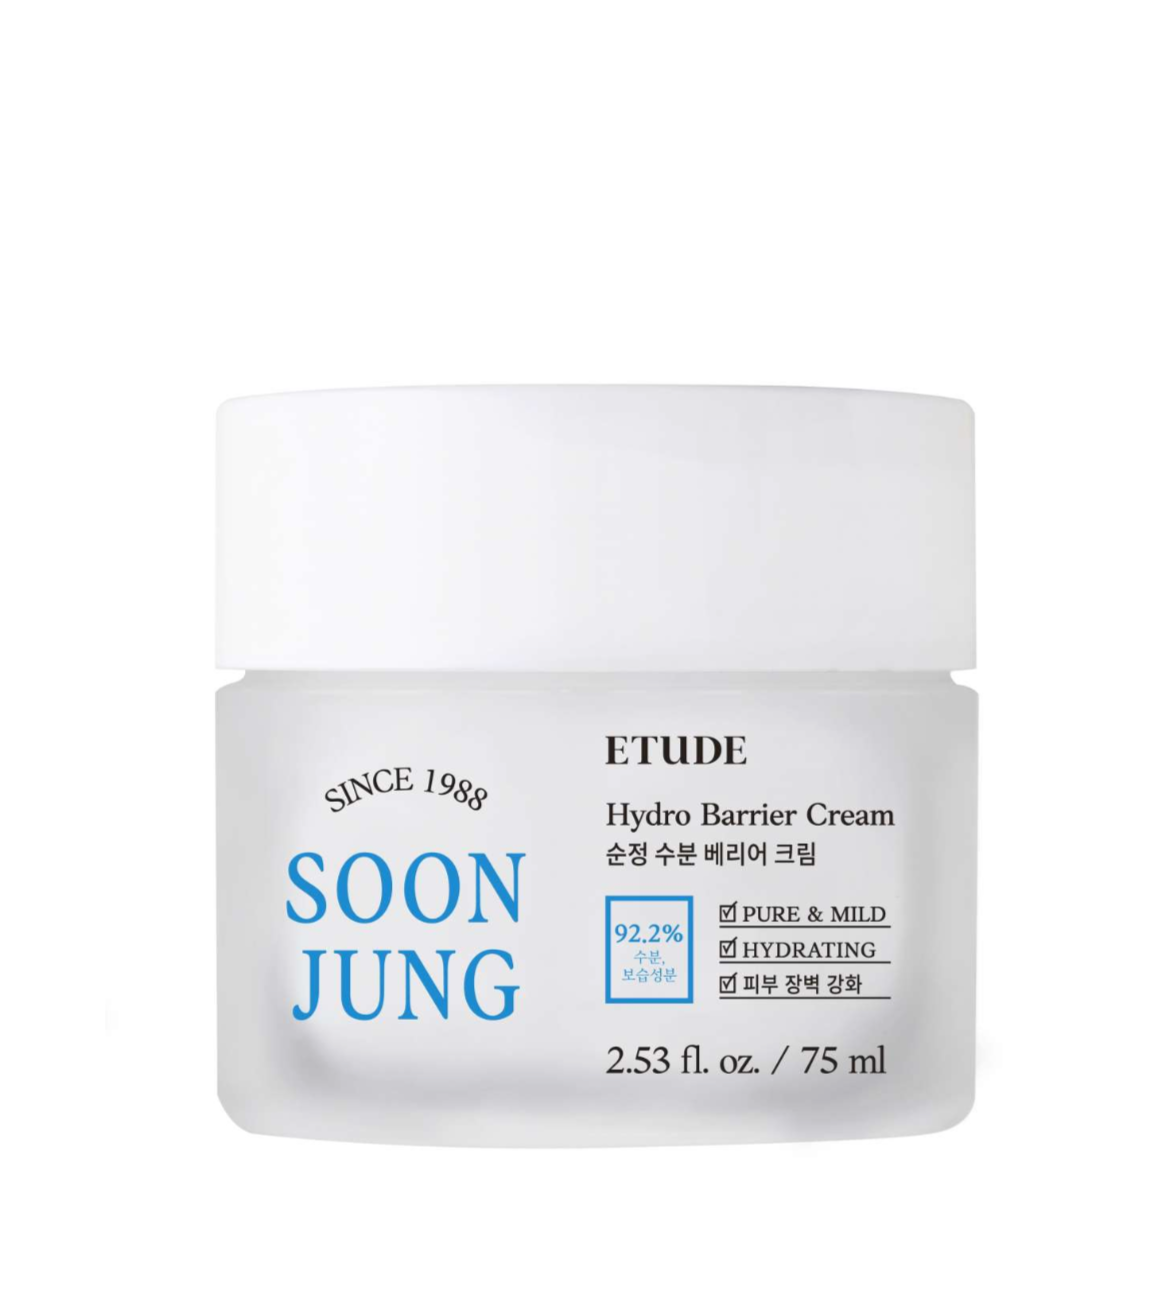 ETUDE Soon Jung Hydro Barrier Cream 75ml